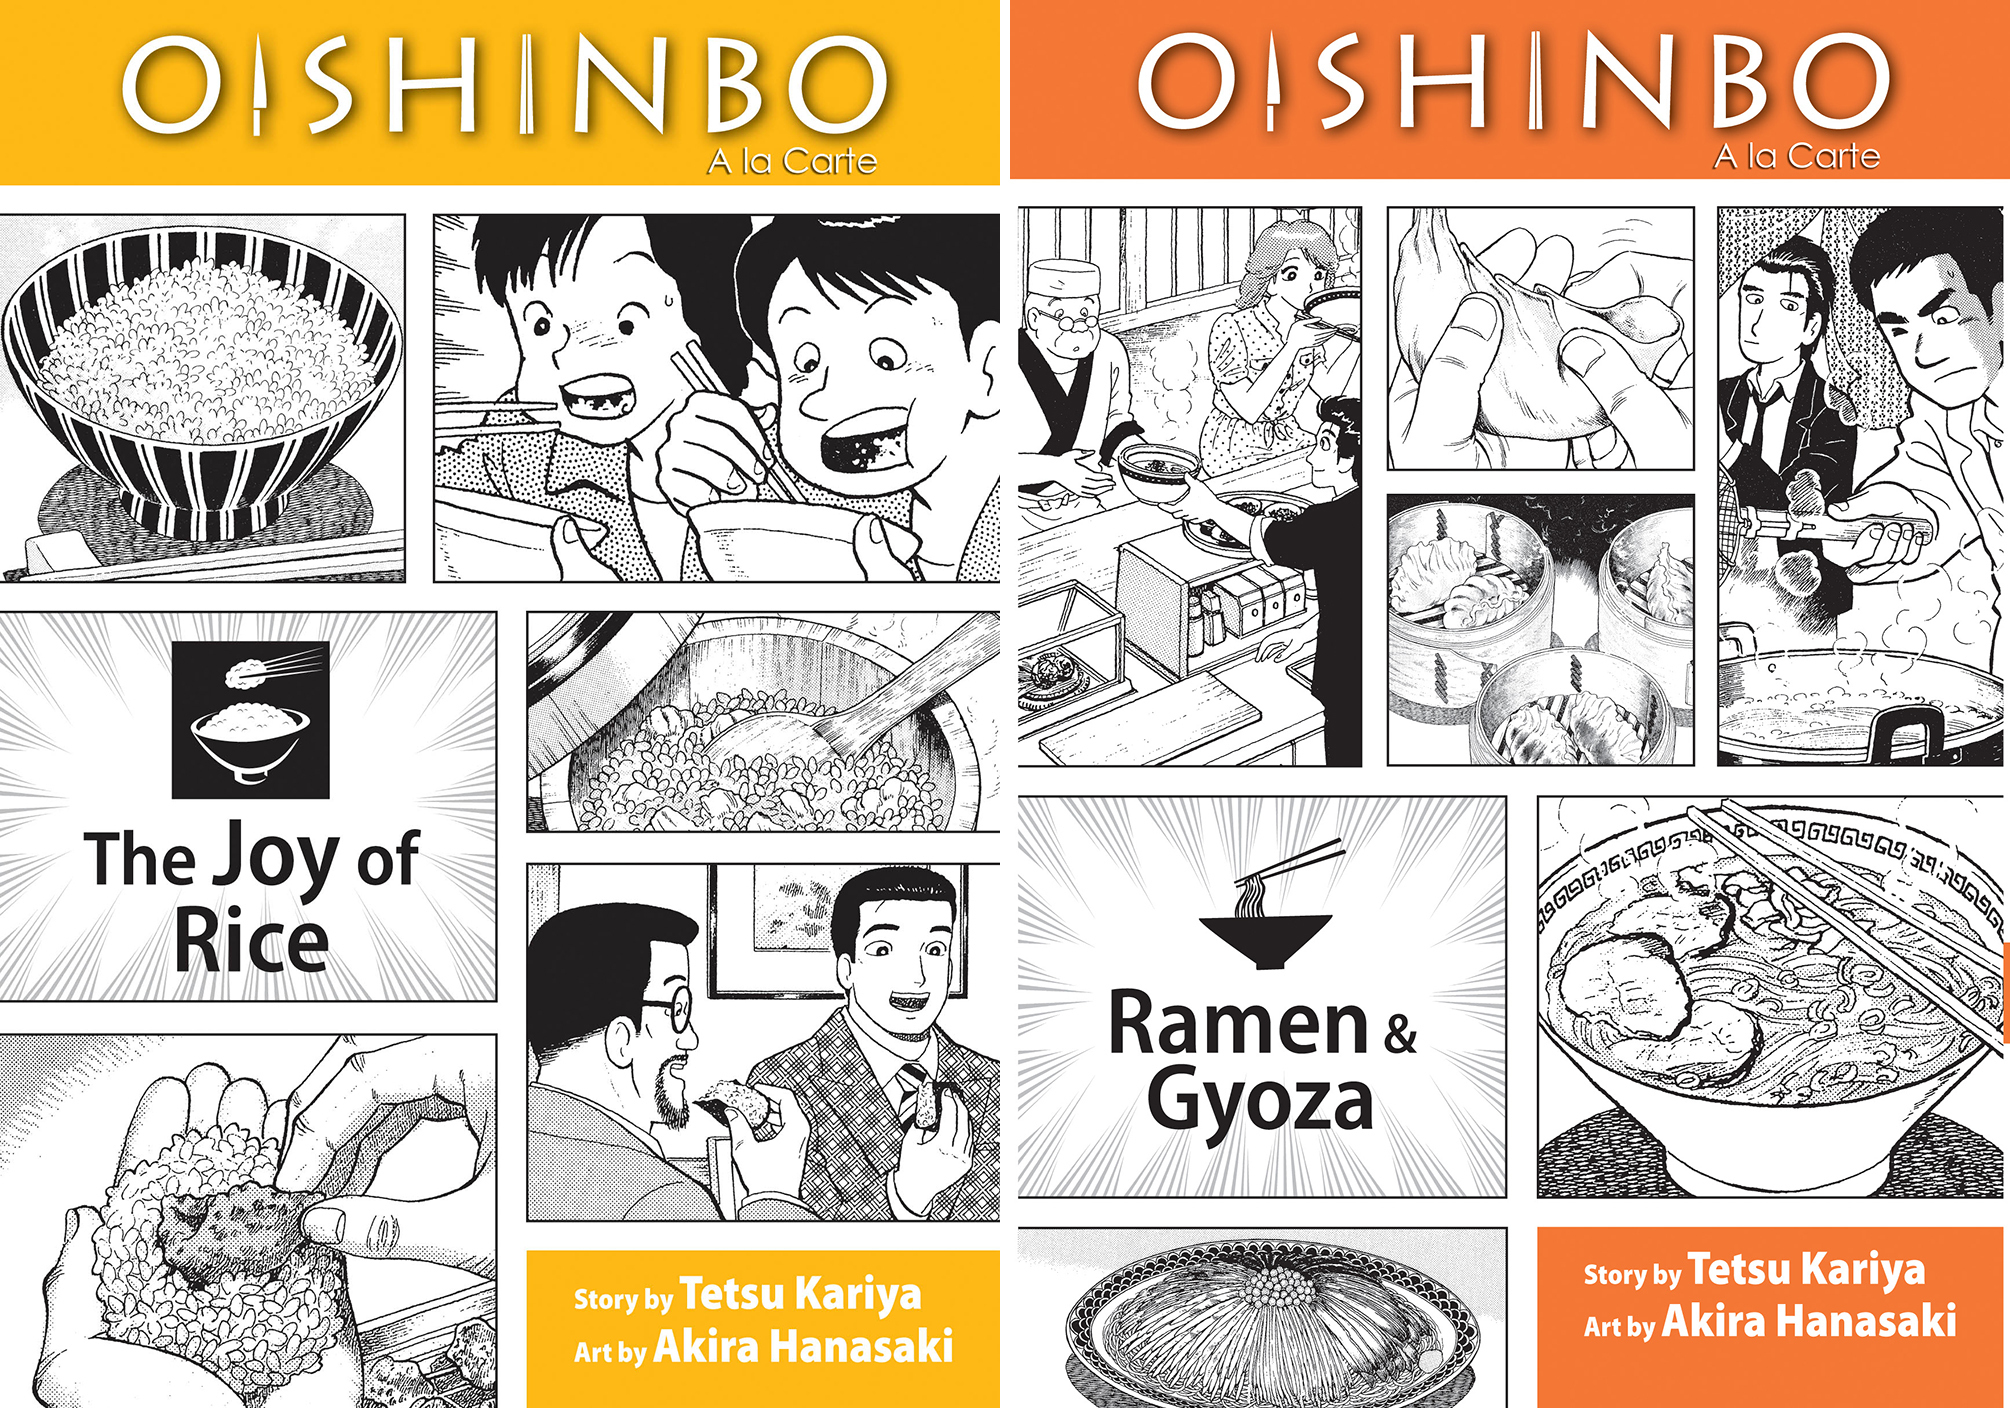 Oishinbo, written by Tetsu Kariya and drawn by Akira Hanasaki, is one of the oldest of the food manga.